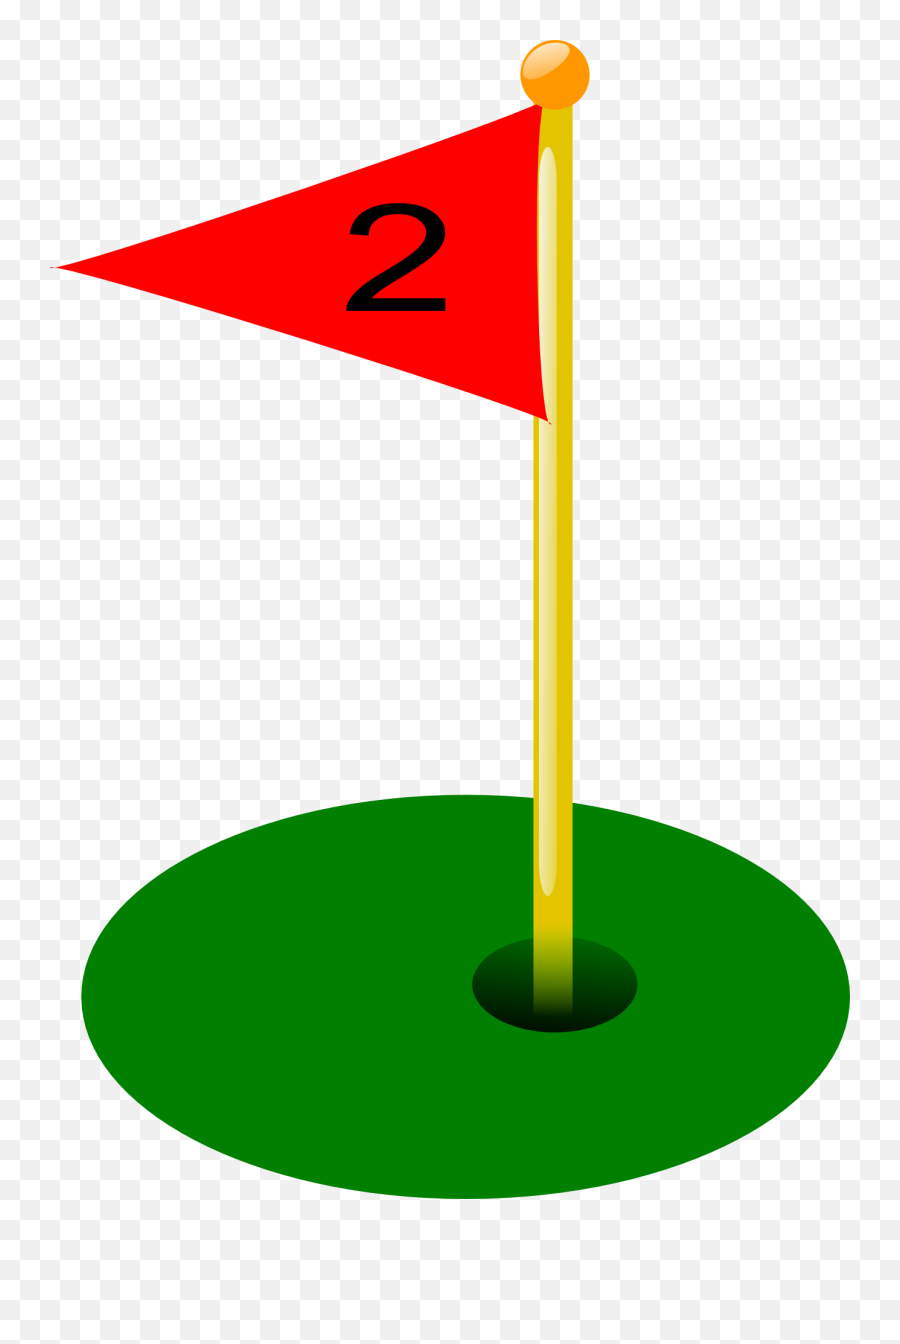 Image - Golf Flag Hole 2 Emoji,Golf Clubs Clipart